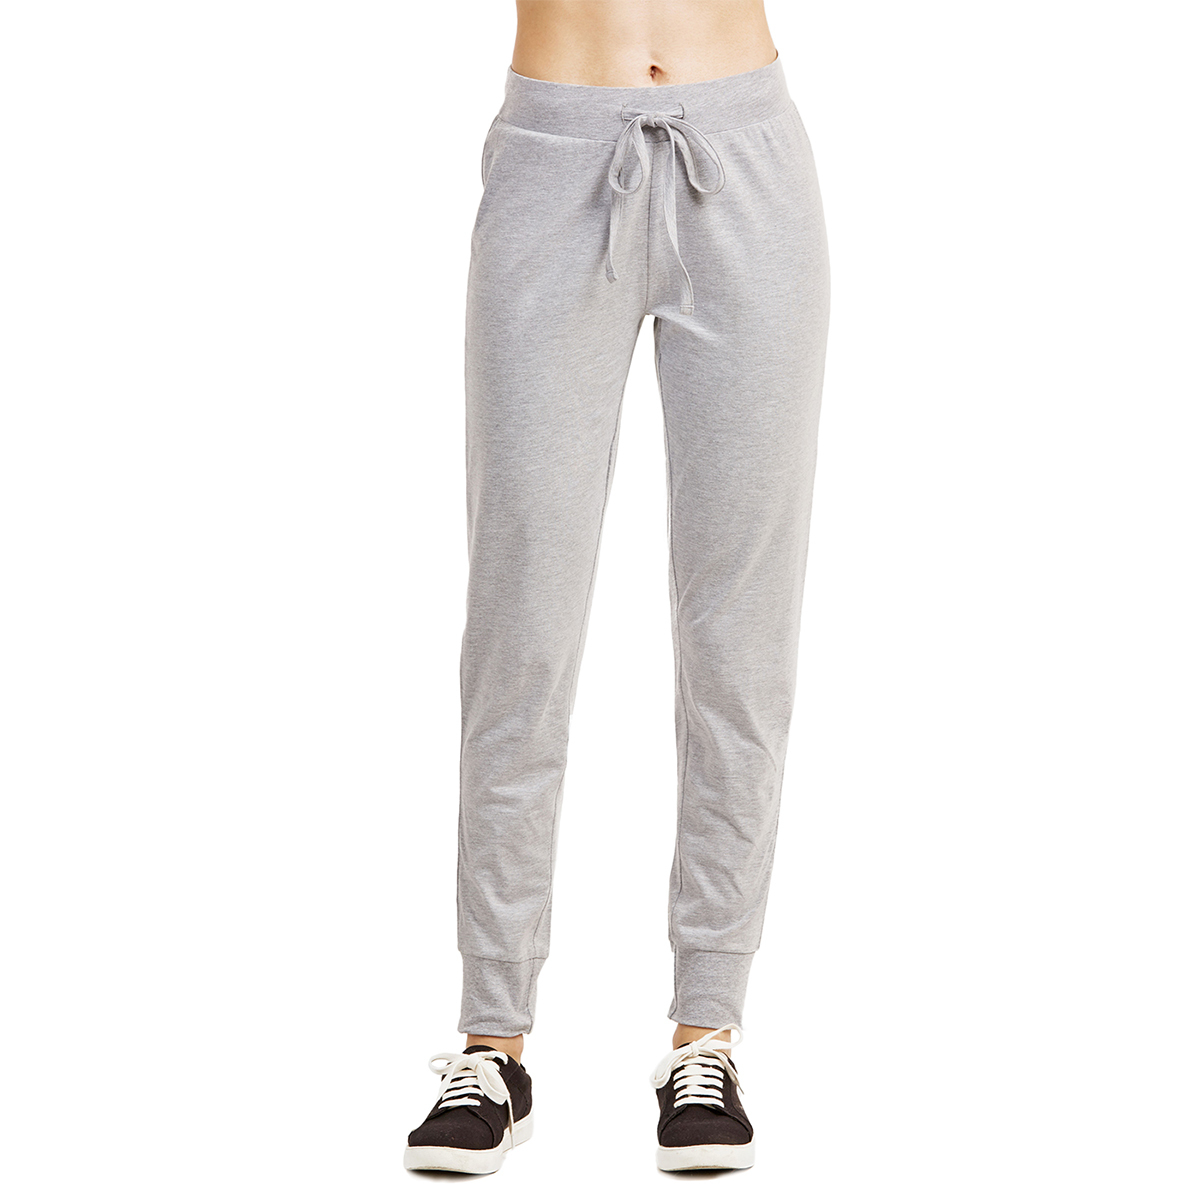 Women's Lightweight Cotton Jogger Pants - Heather Grey, Medium, Pockets